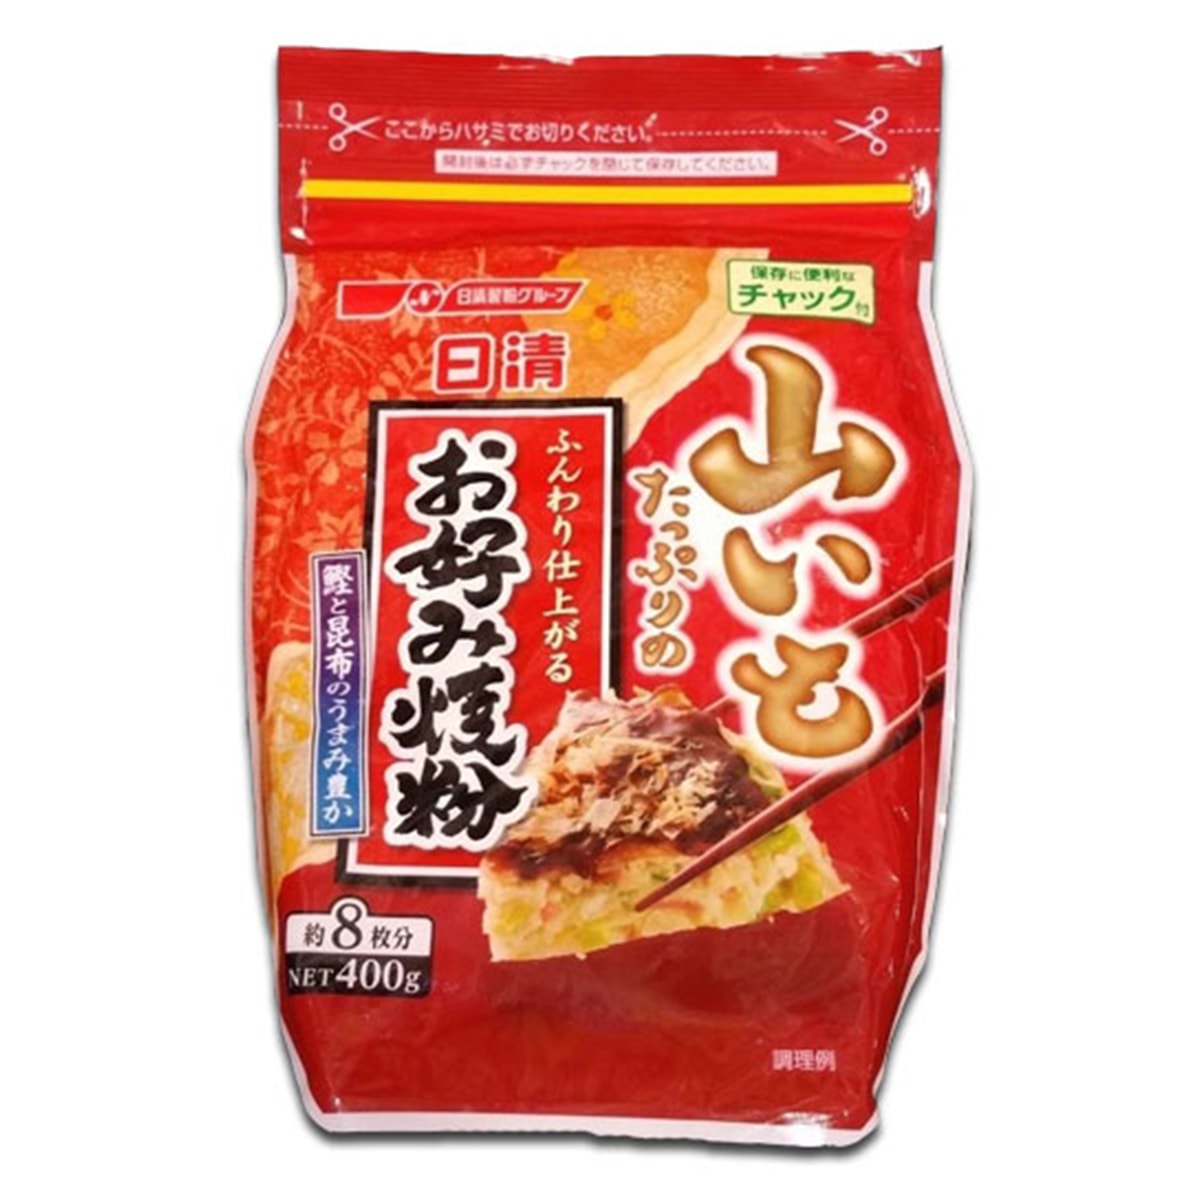 Buy Nisshin Okonomiyaki Flour (Japanese Savoury Pancake Mix) - 400 gm